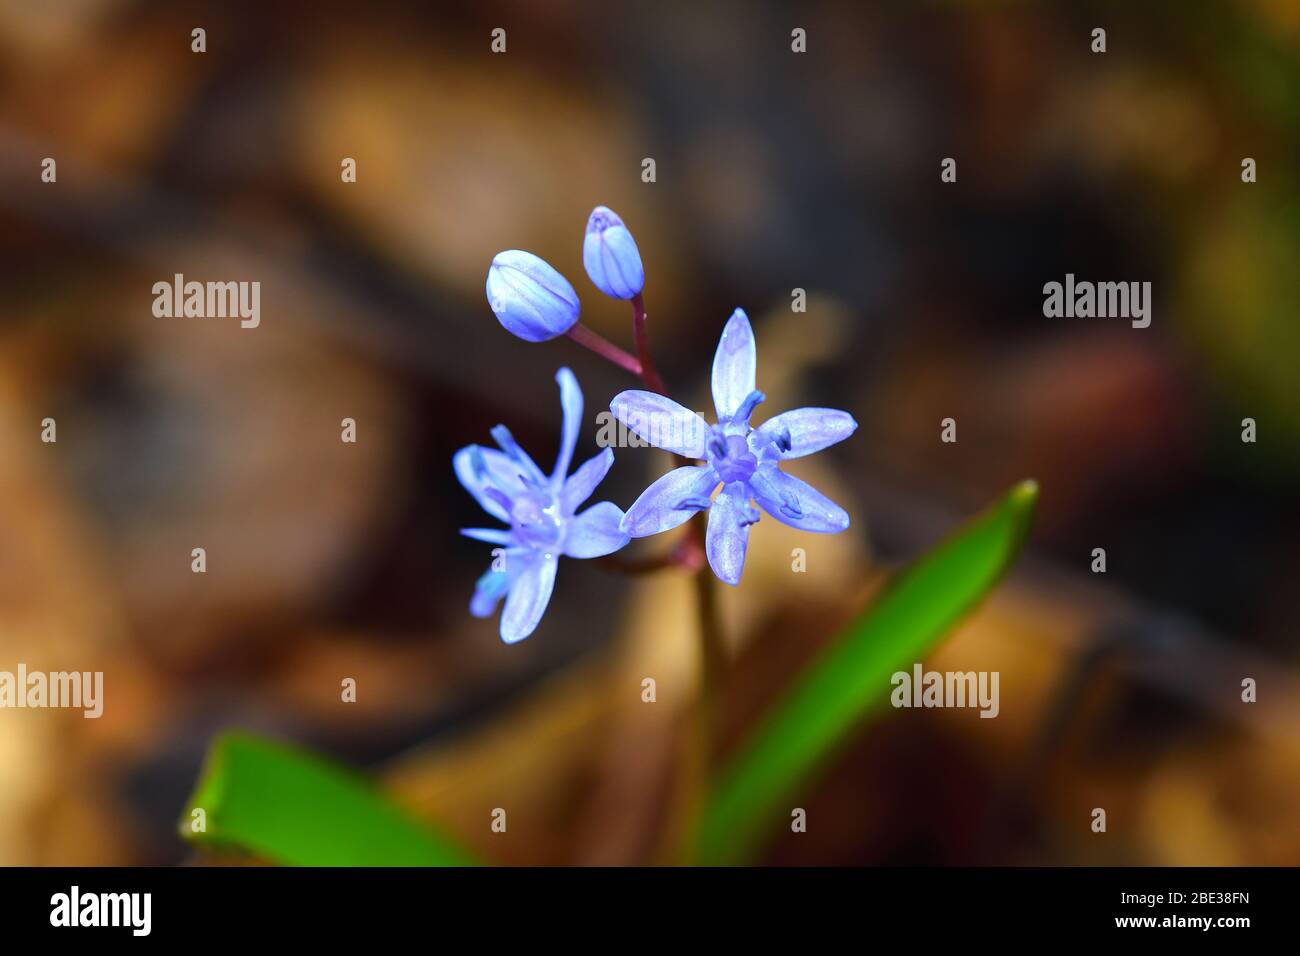 Wild gentian-blue scilla flower close-up. Stock Photo